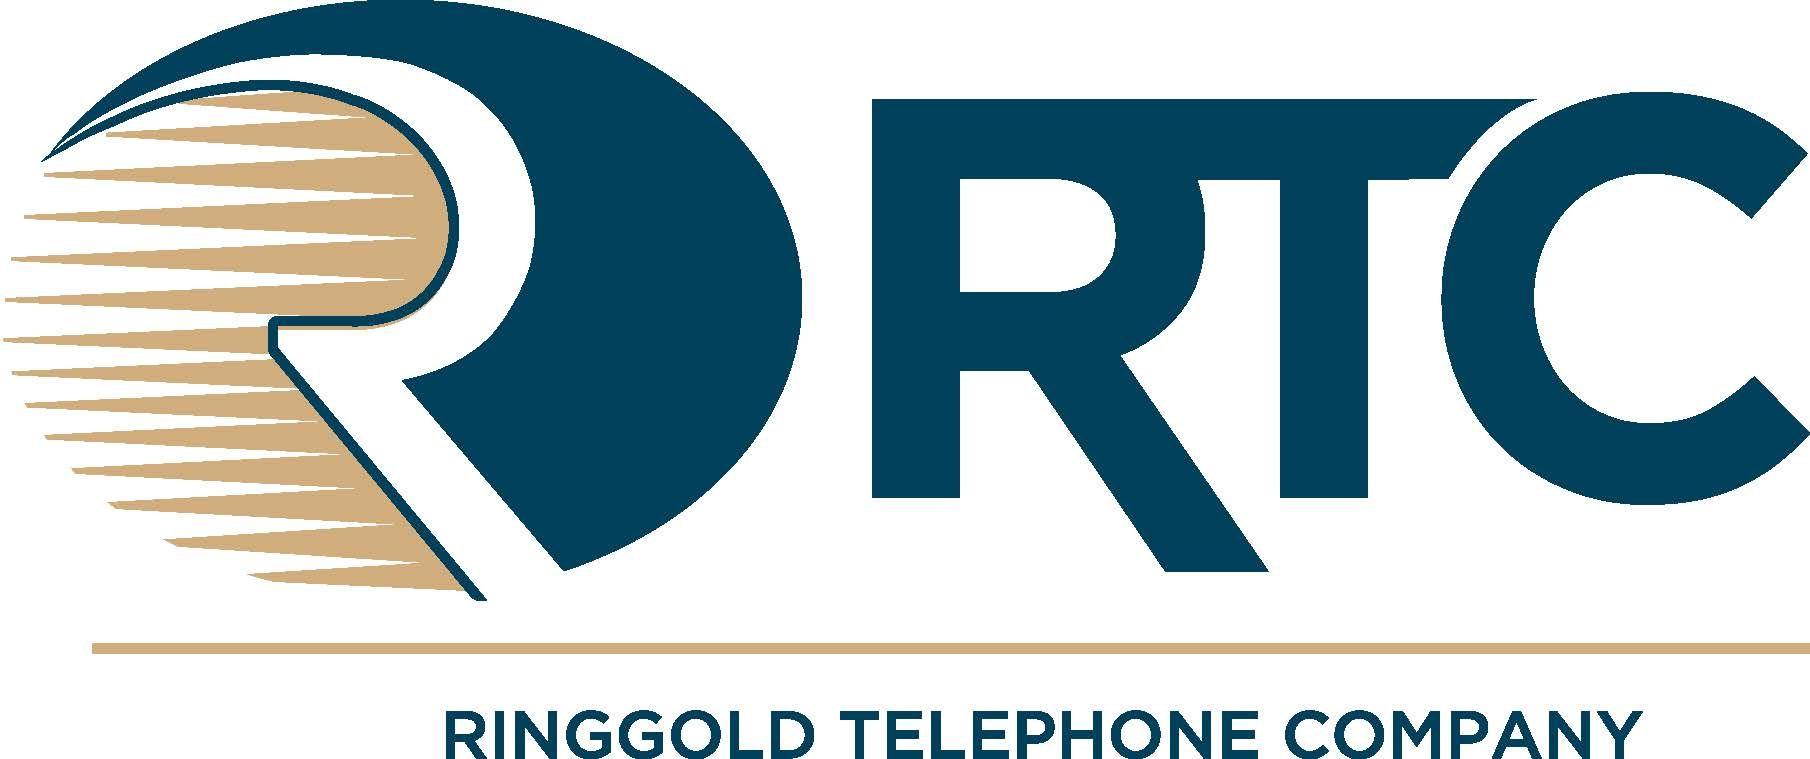 Telephone Company Logo - Ringgold Telephone Company | Fiber Network Alliance